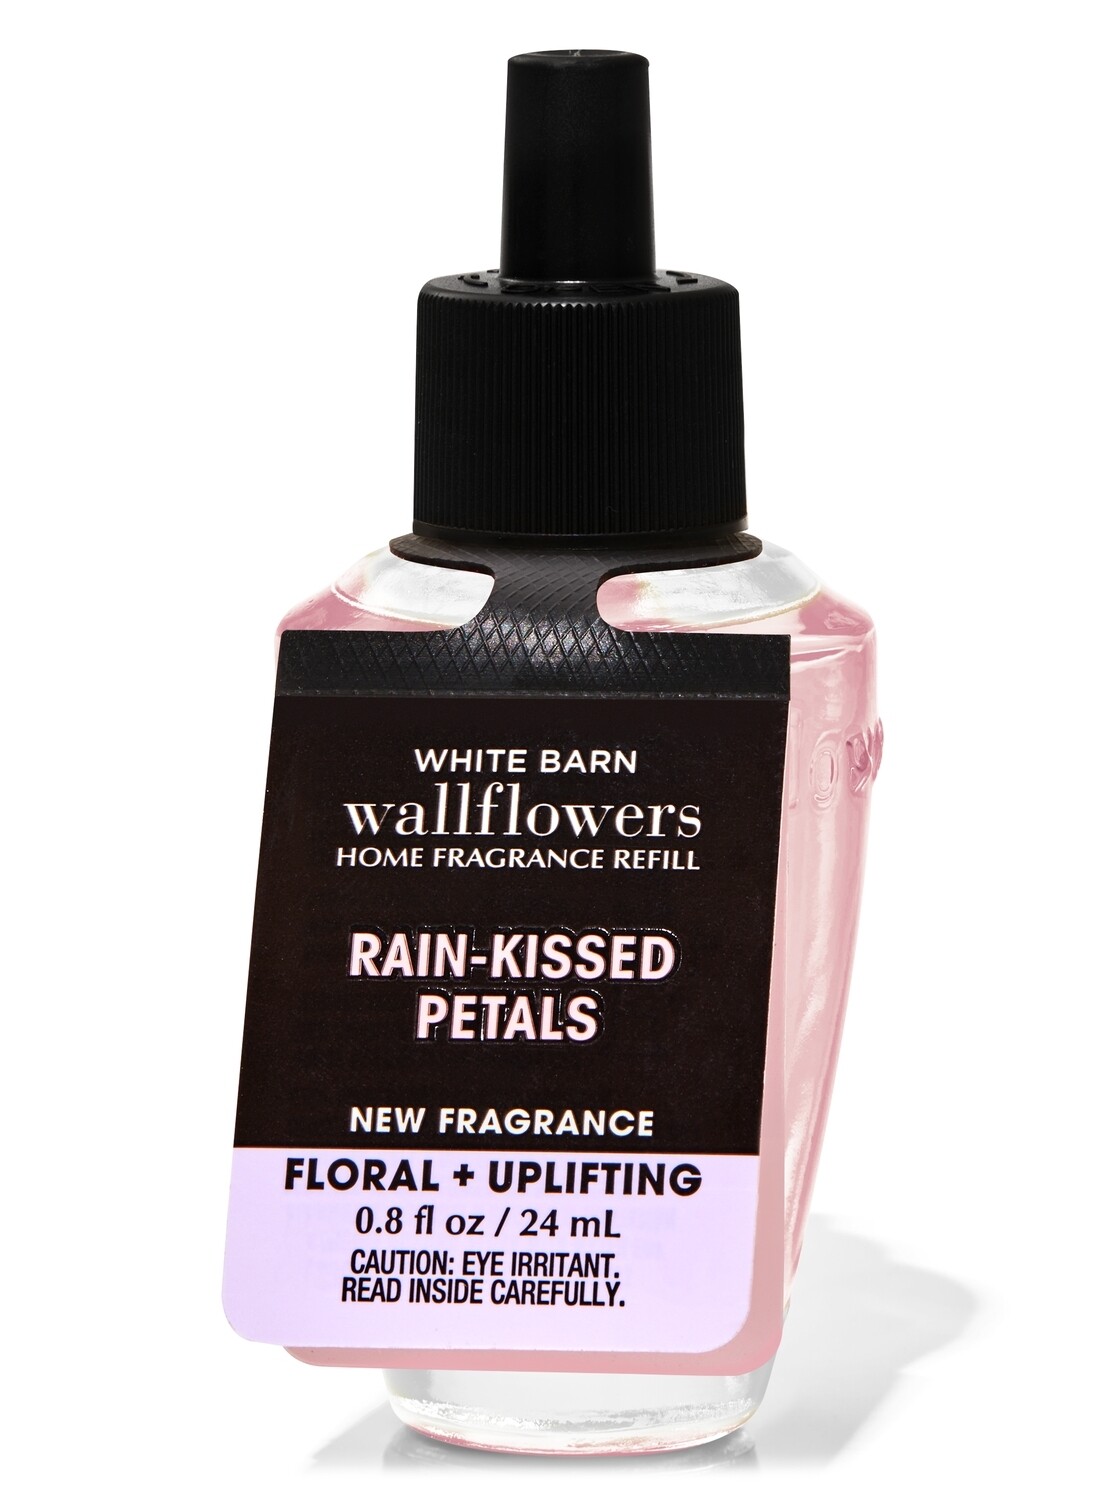 Bath and body works wallflower refill- Rain Kissed Petals 